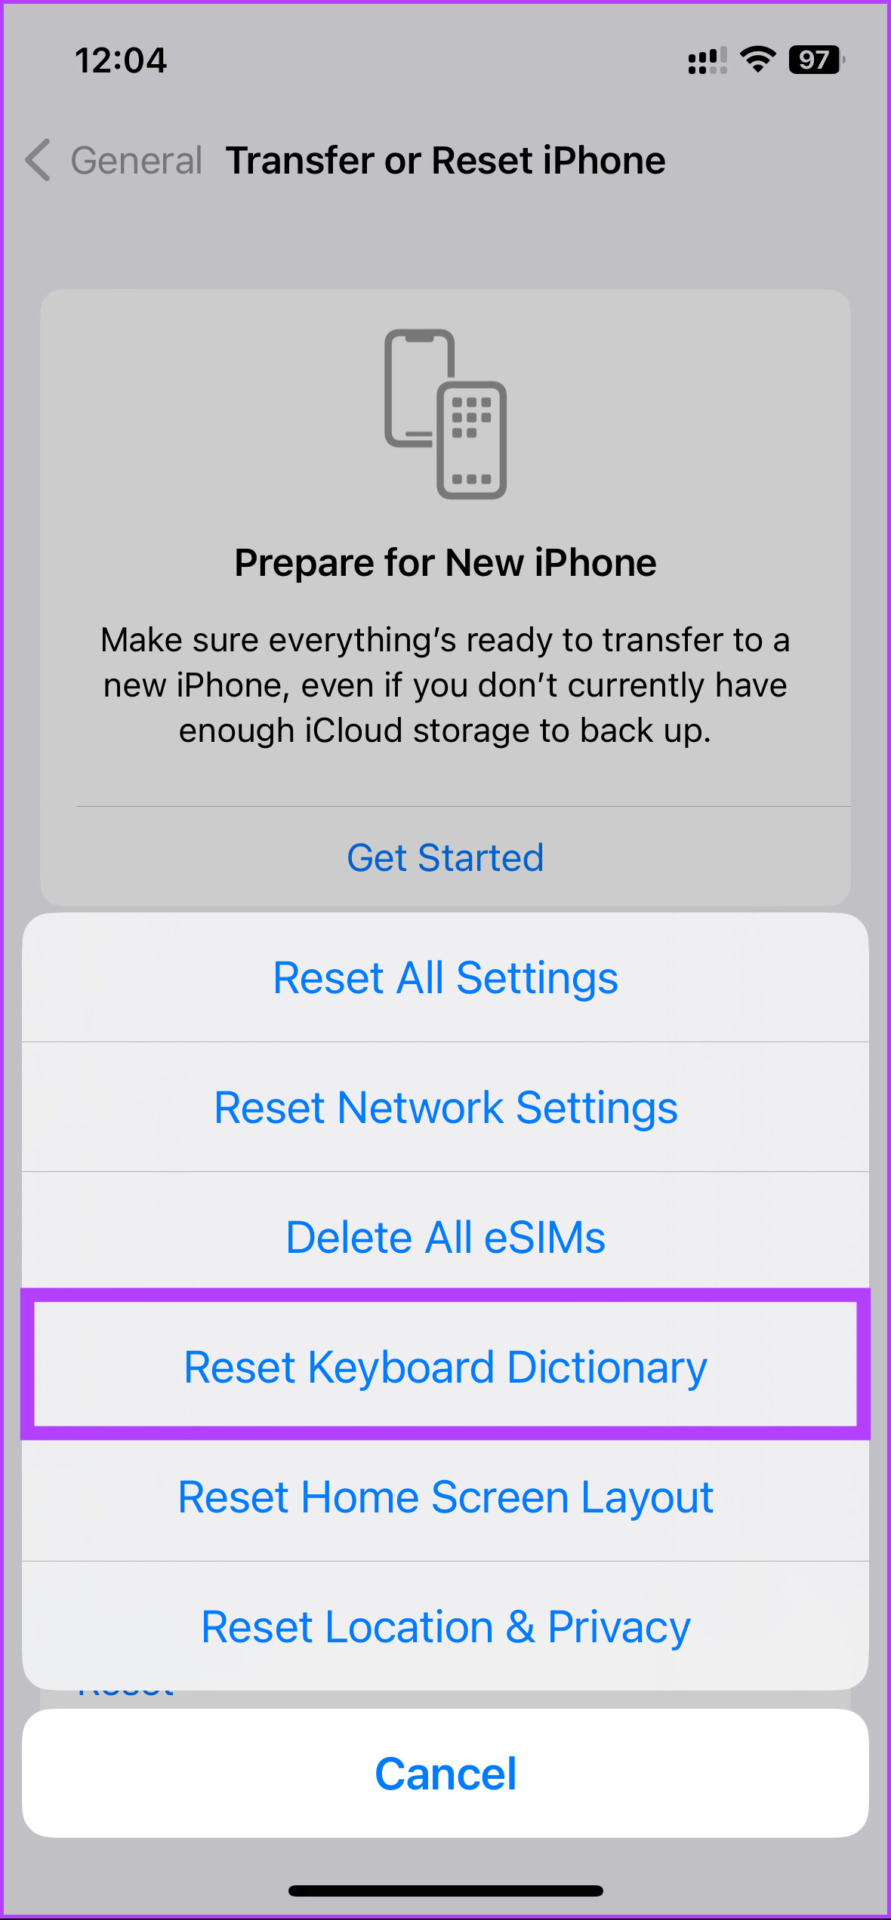 choose Reset Keyboard Dictionary'